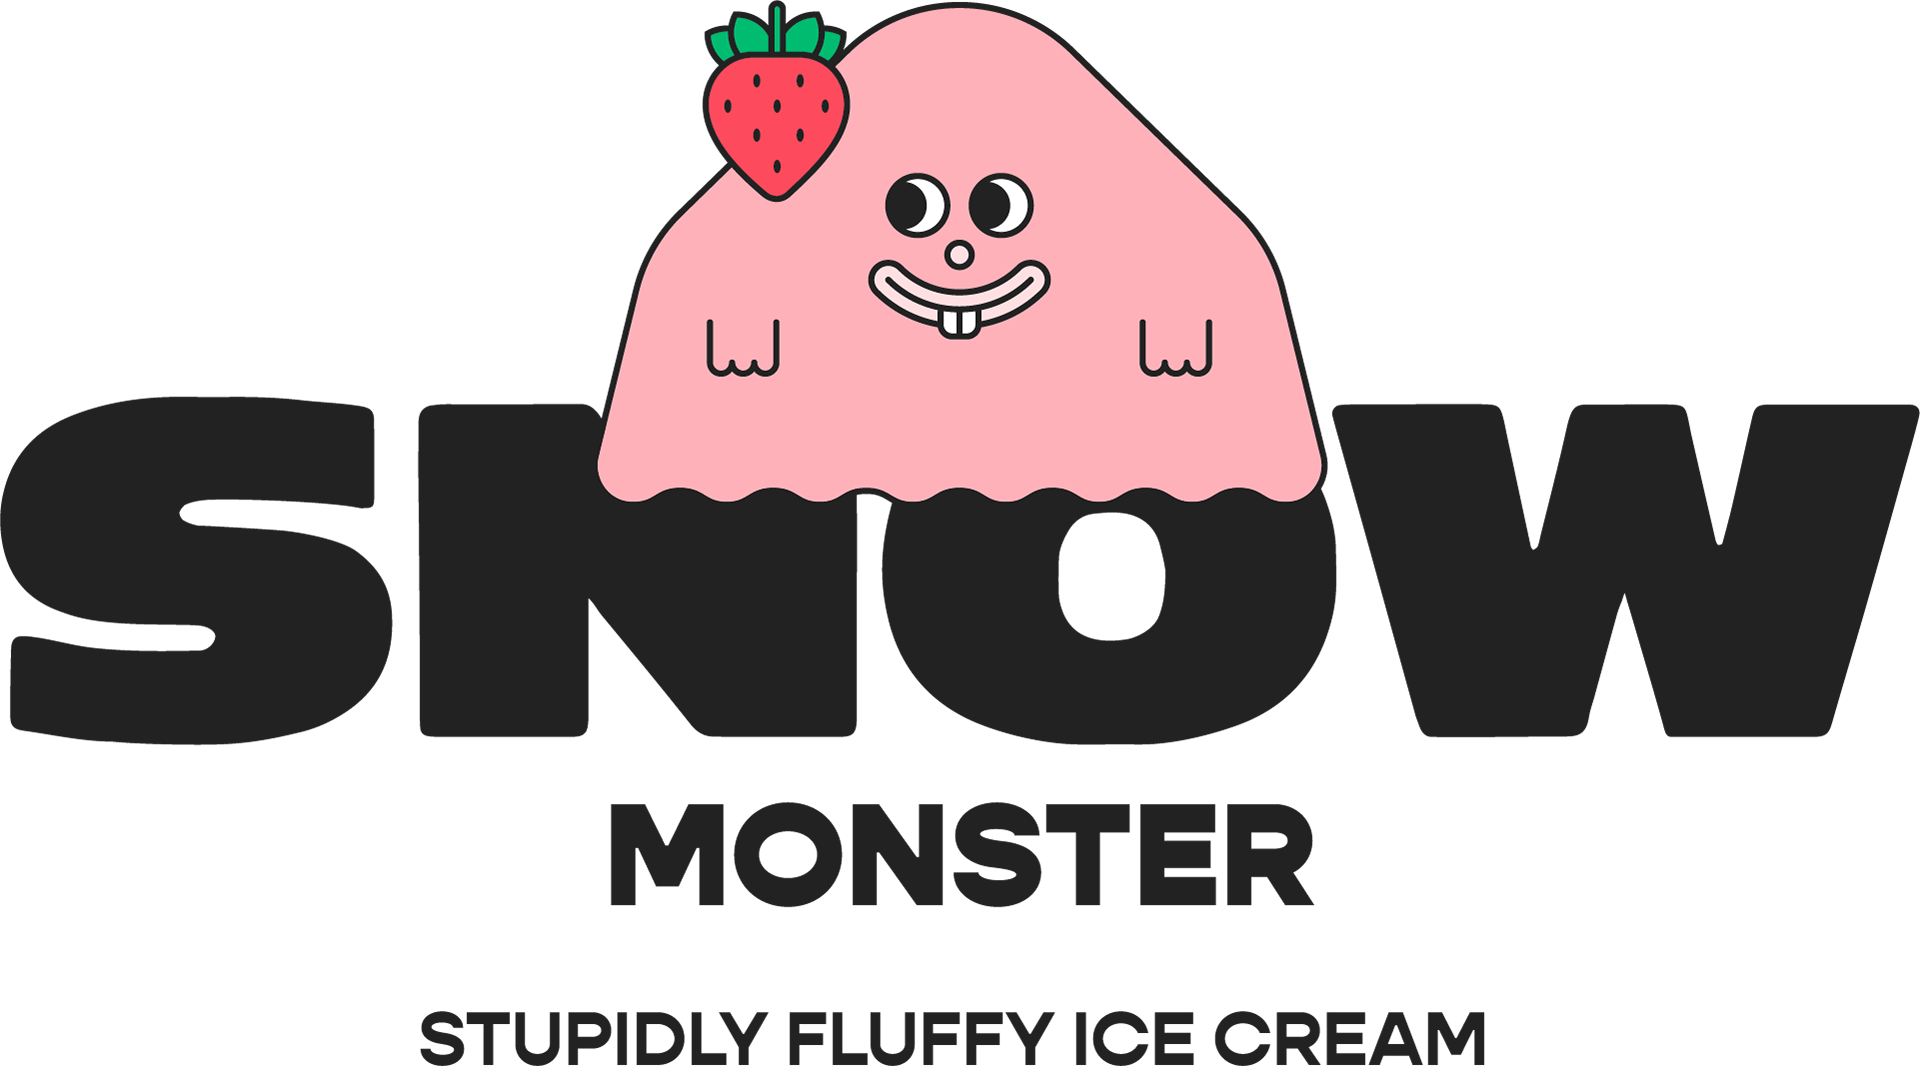 Snow Monster - Stupidly Fluffy Ice Cream